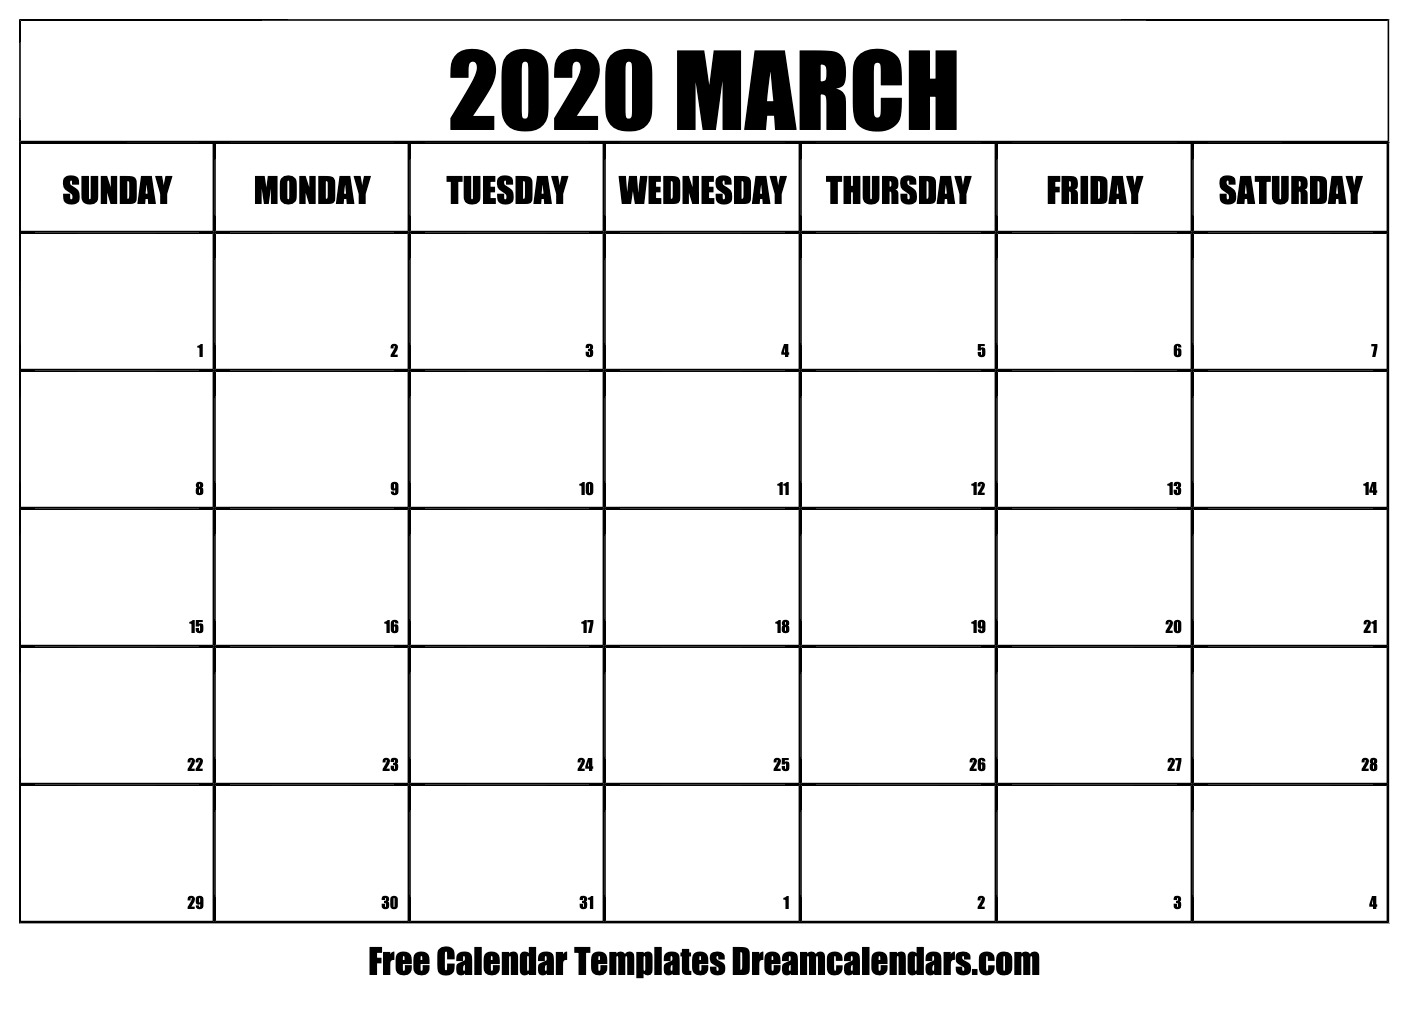 Printable March 2020 Calendar1406 x 1020